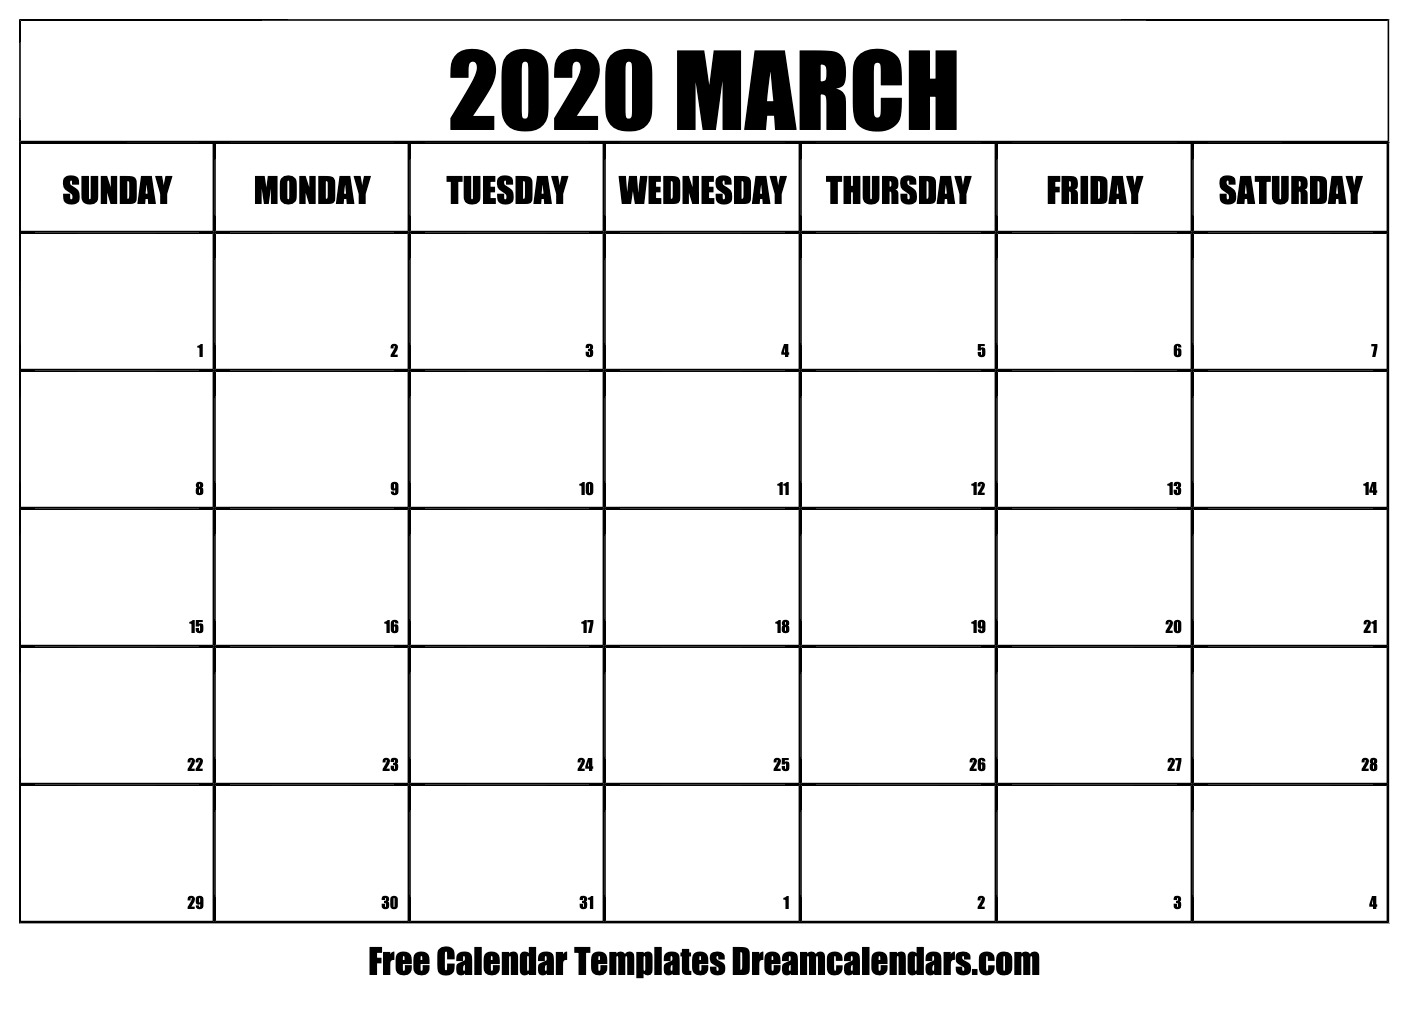 Printable March 2020 Calendar1406 x 1020